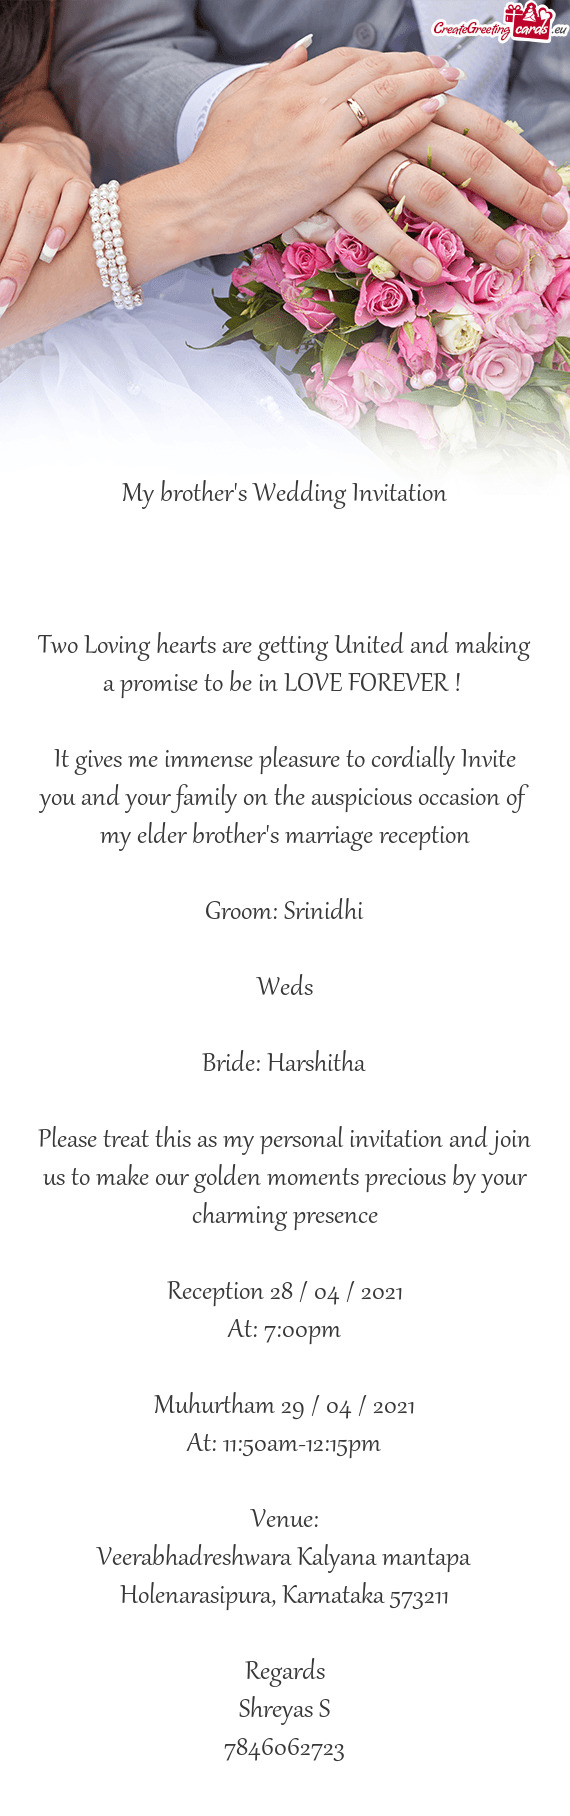 Bride: Harshitha